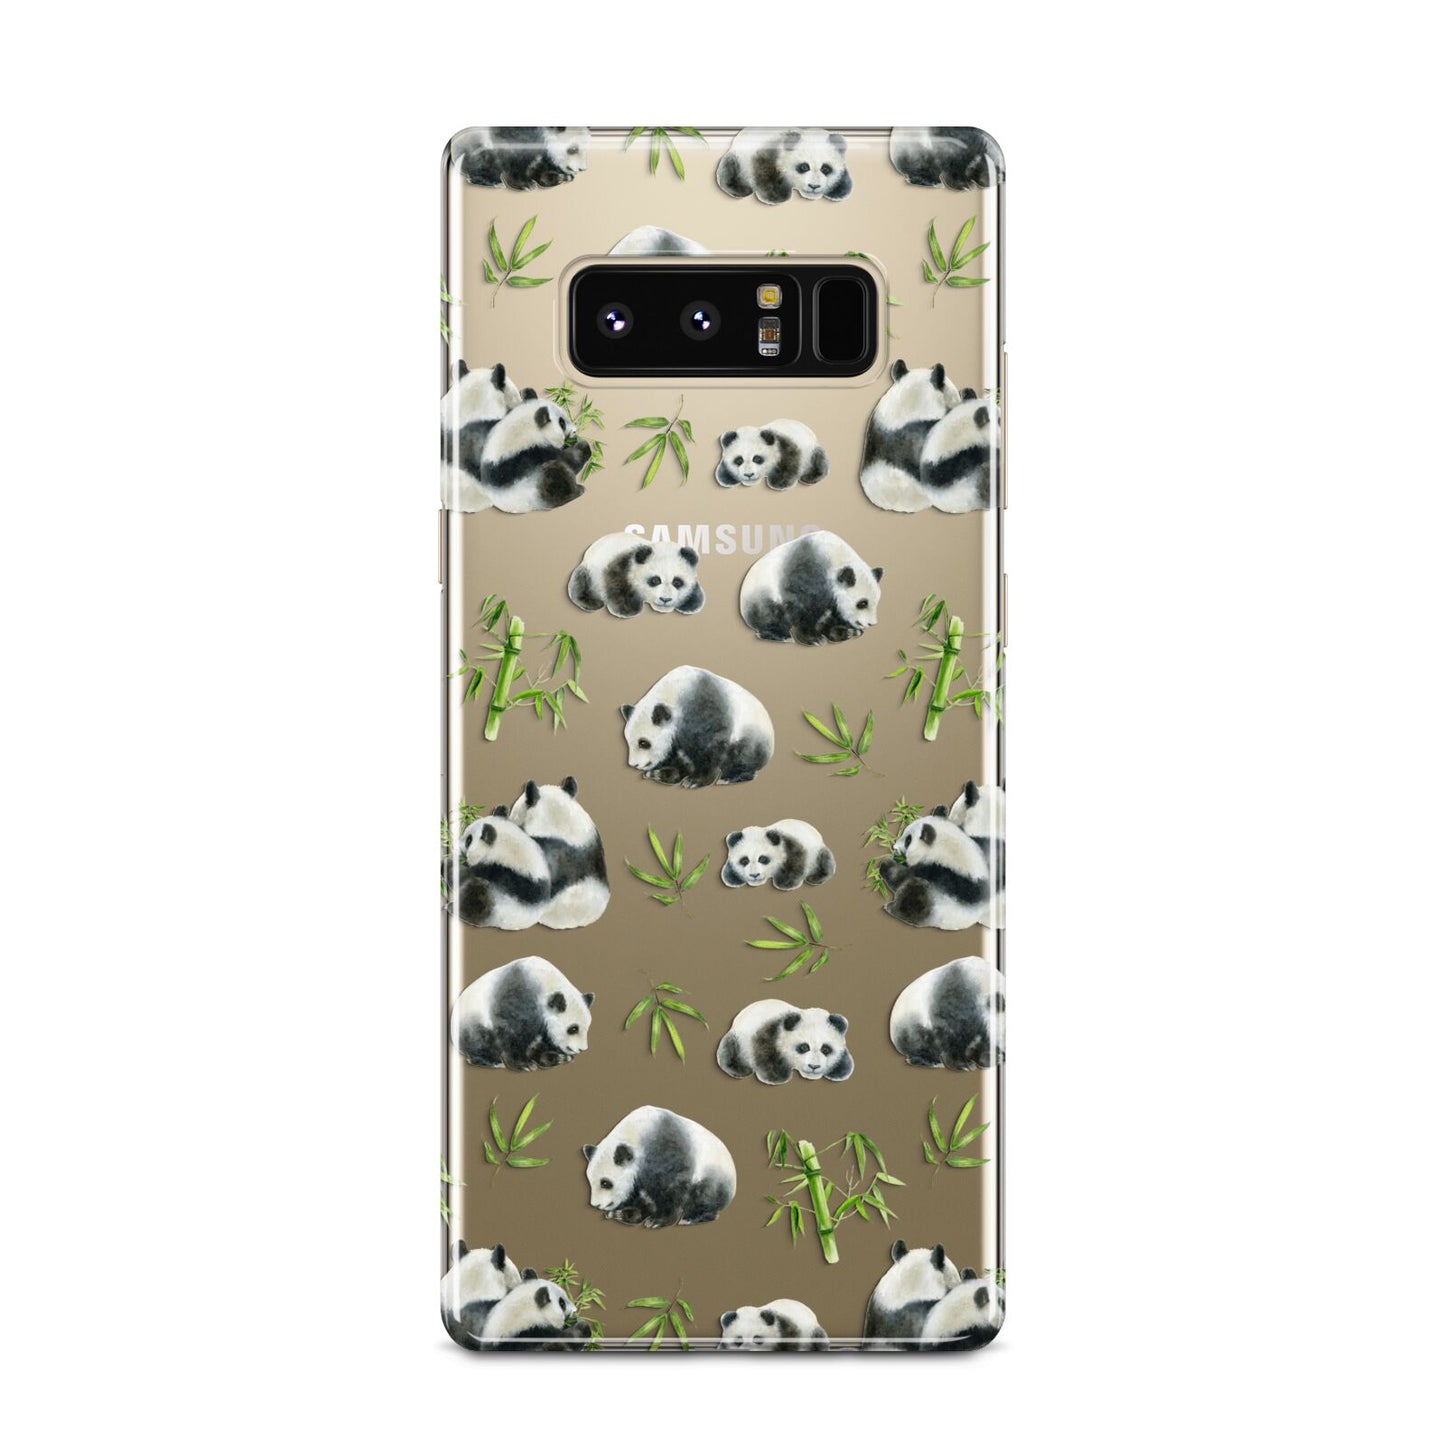 Panda Samsung Galaxy Note 8 Case